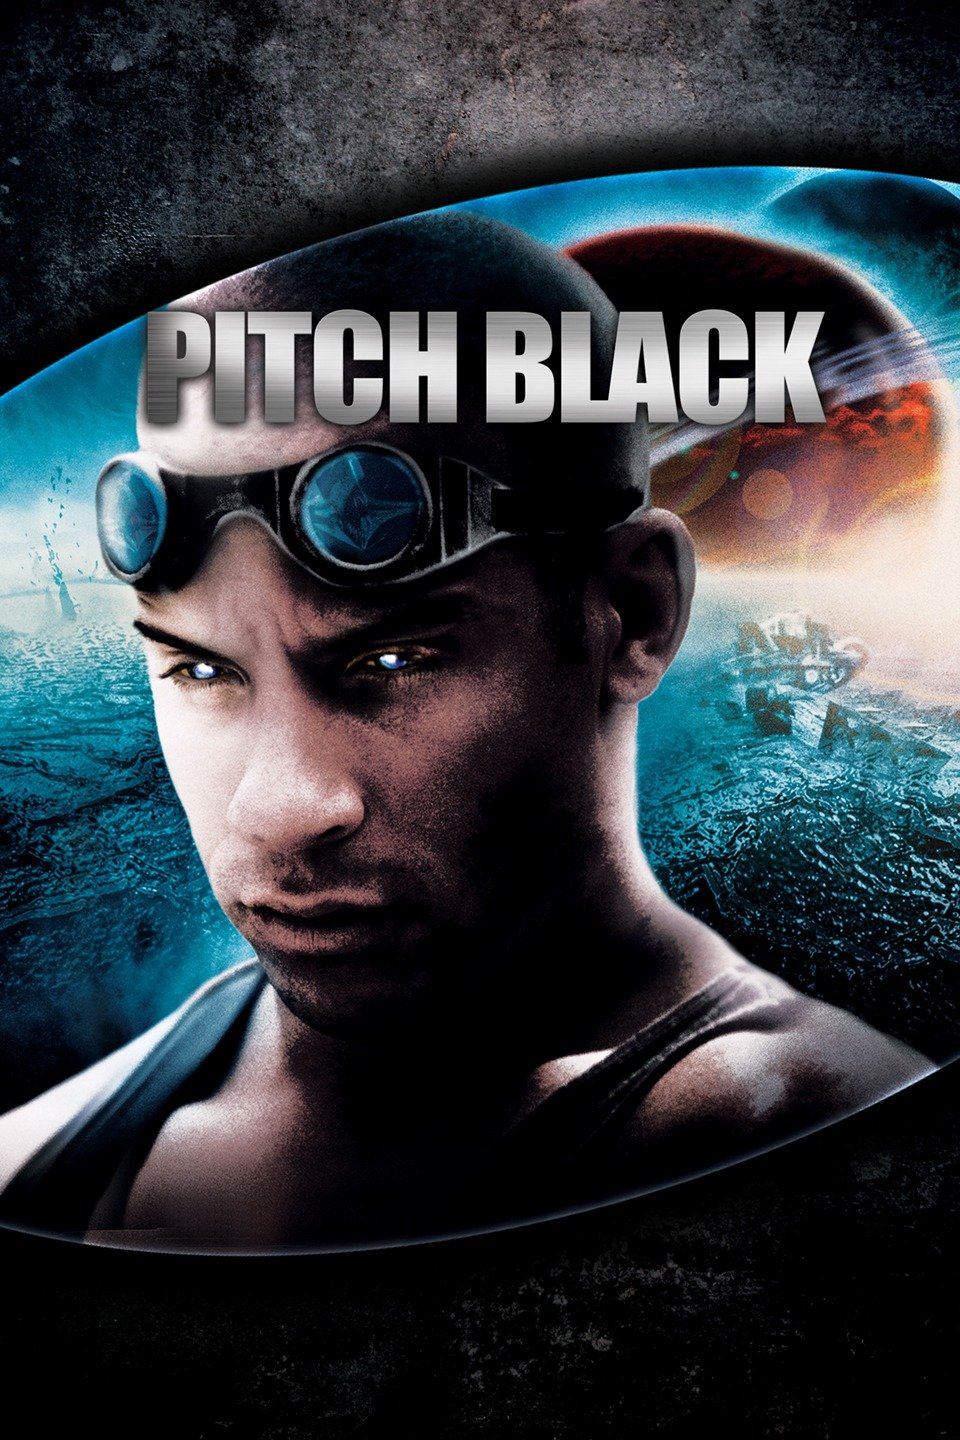 Riddick 1 Pitch Black (2000) ฝูงค้างคาวฉลามสยองจักรวาล - ดูหนังออนไลน